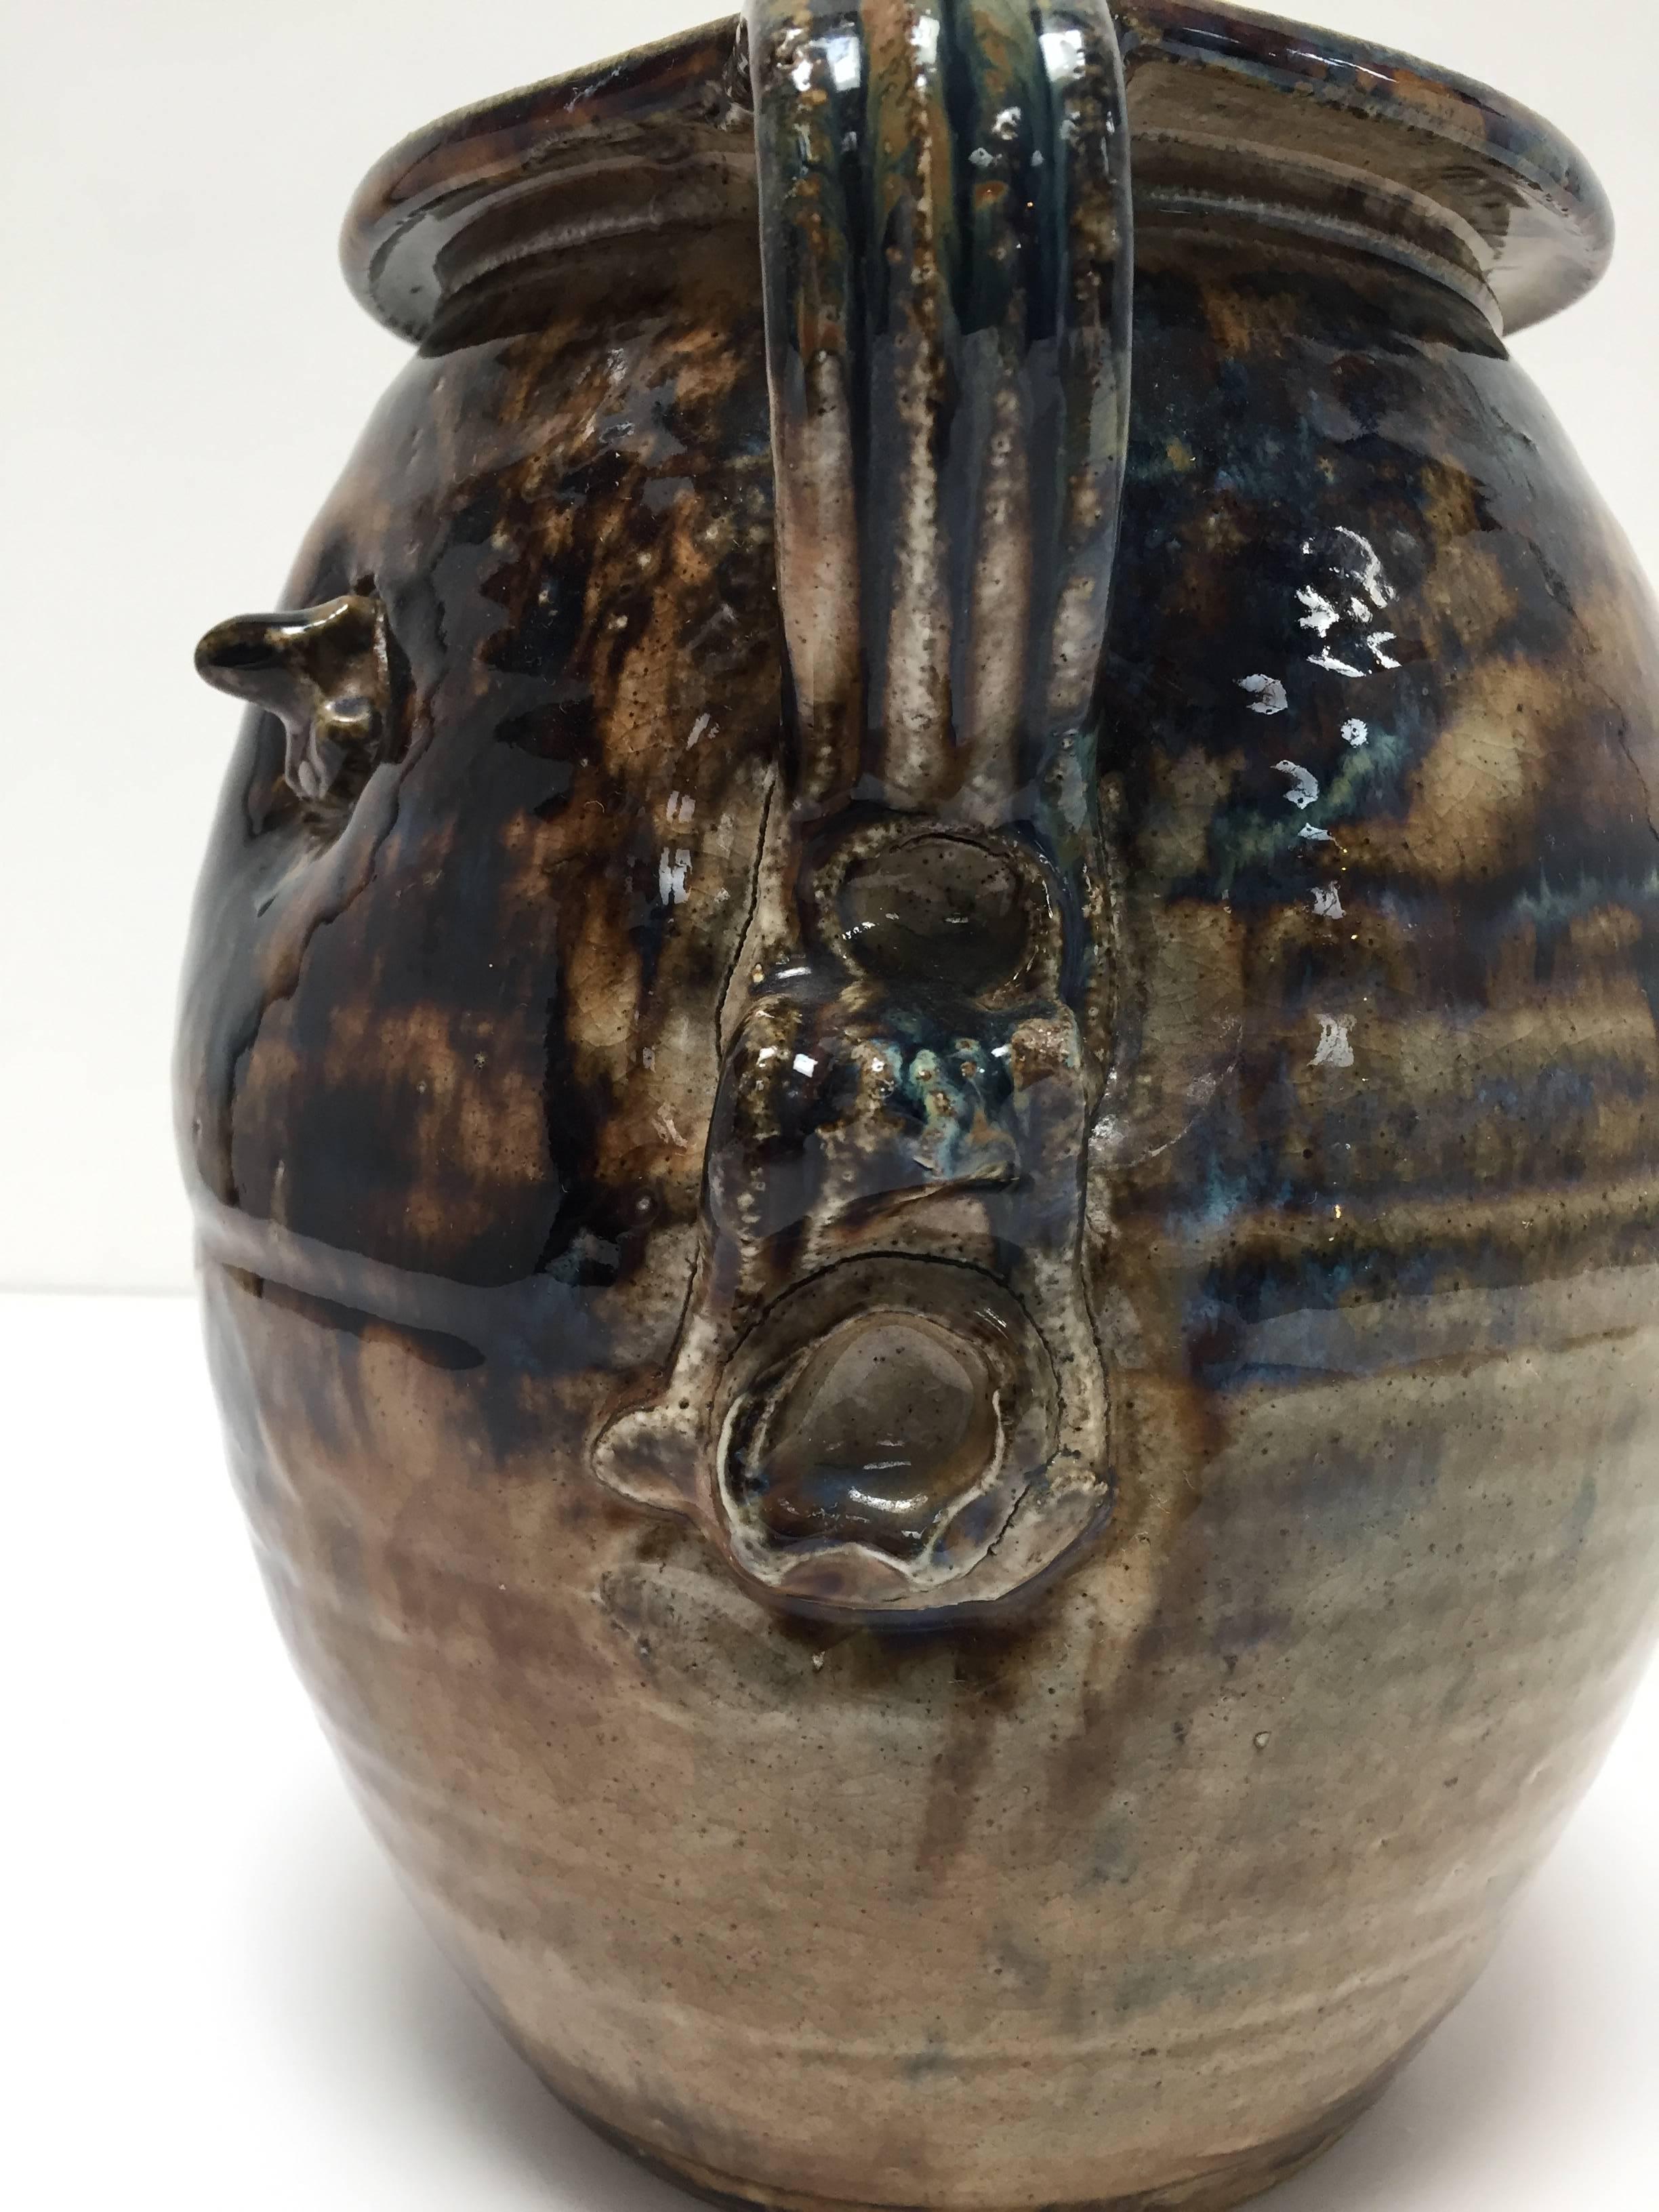 20th Century Hand Thrown Stoneware Art Studio Jar in Blue and Brown